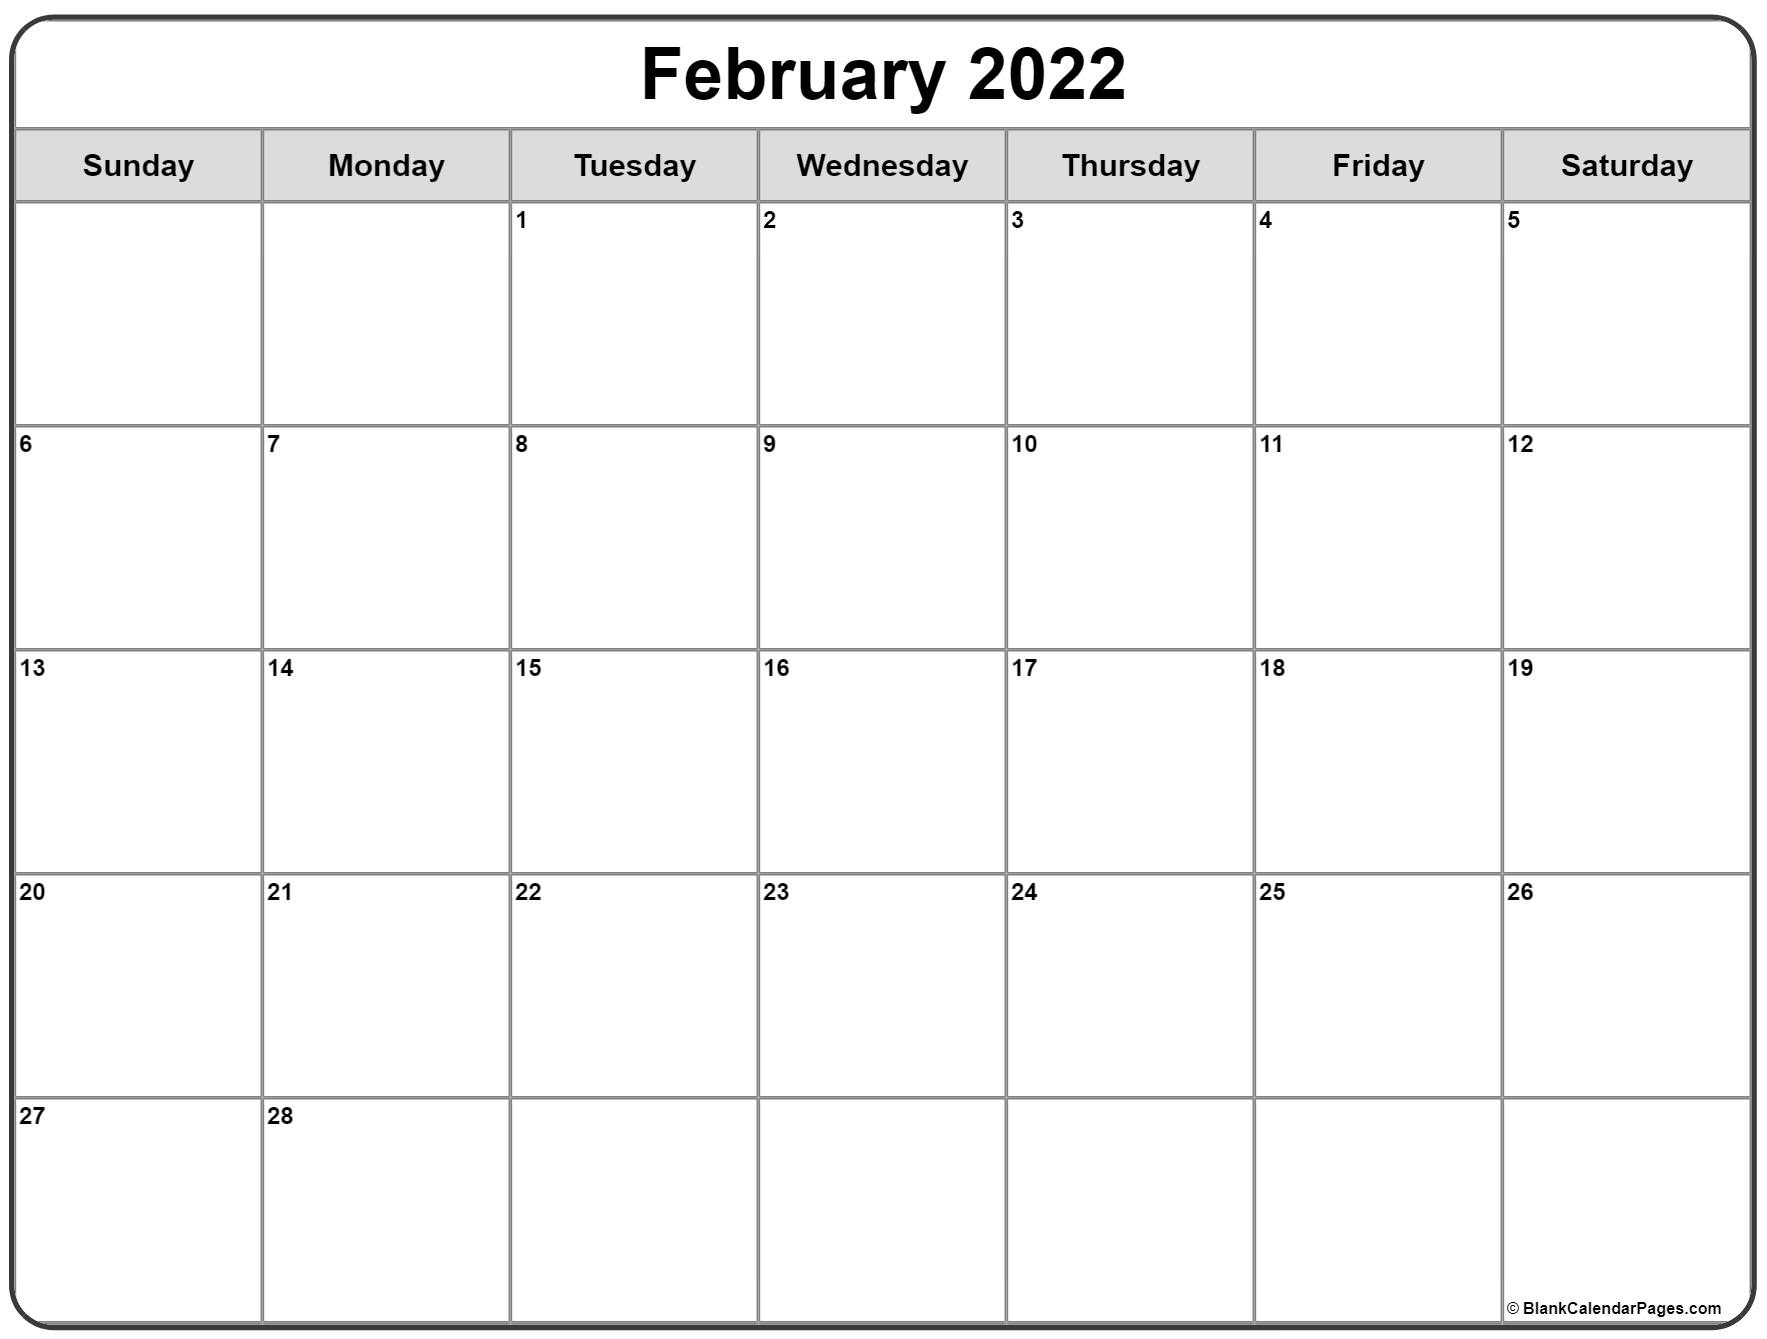 February 2022 Calendar Viewable